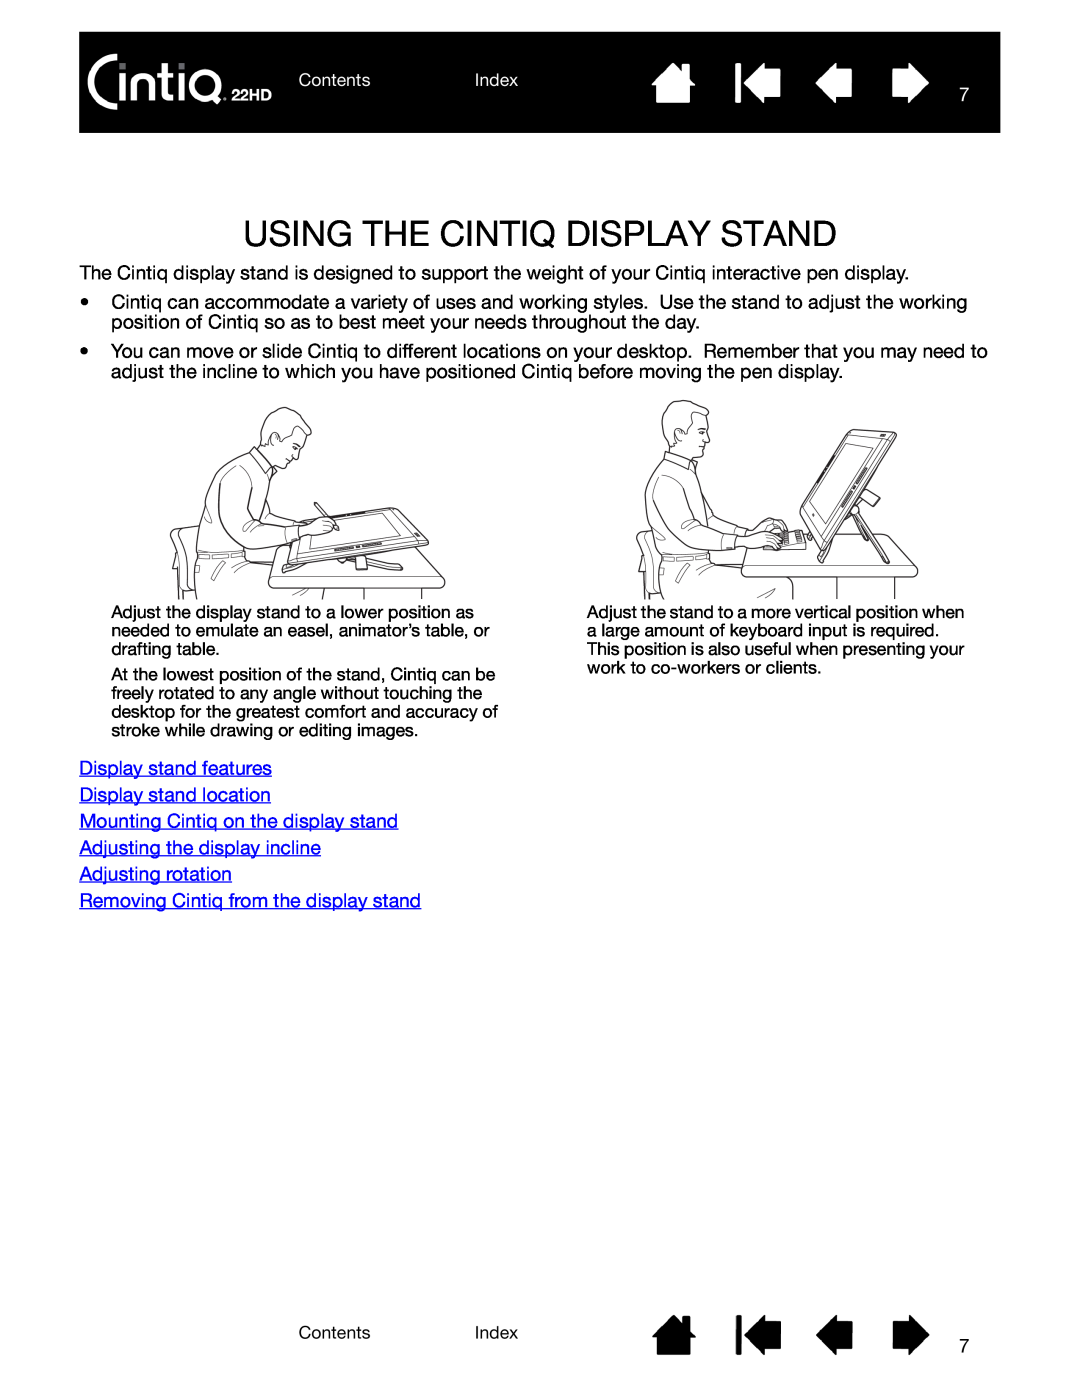 Wacom DTK-2200 user manual Using The Cintiq Display Stand, Display stand features Display stand location 